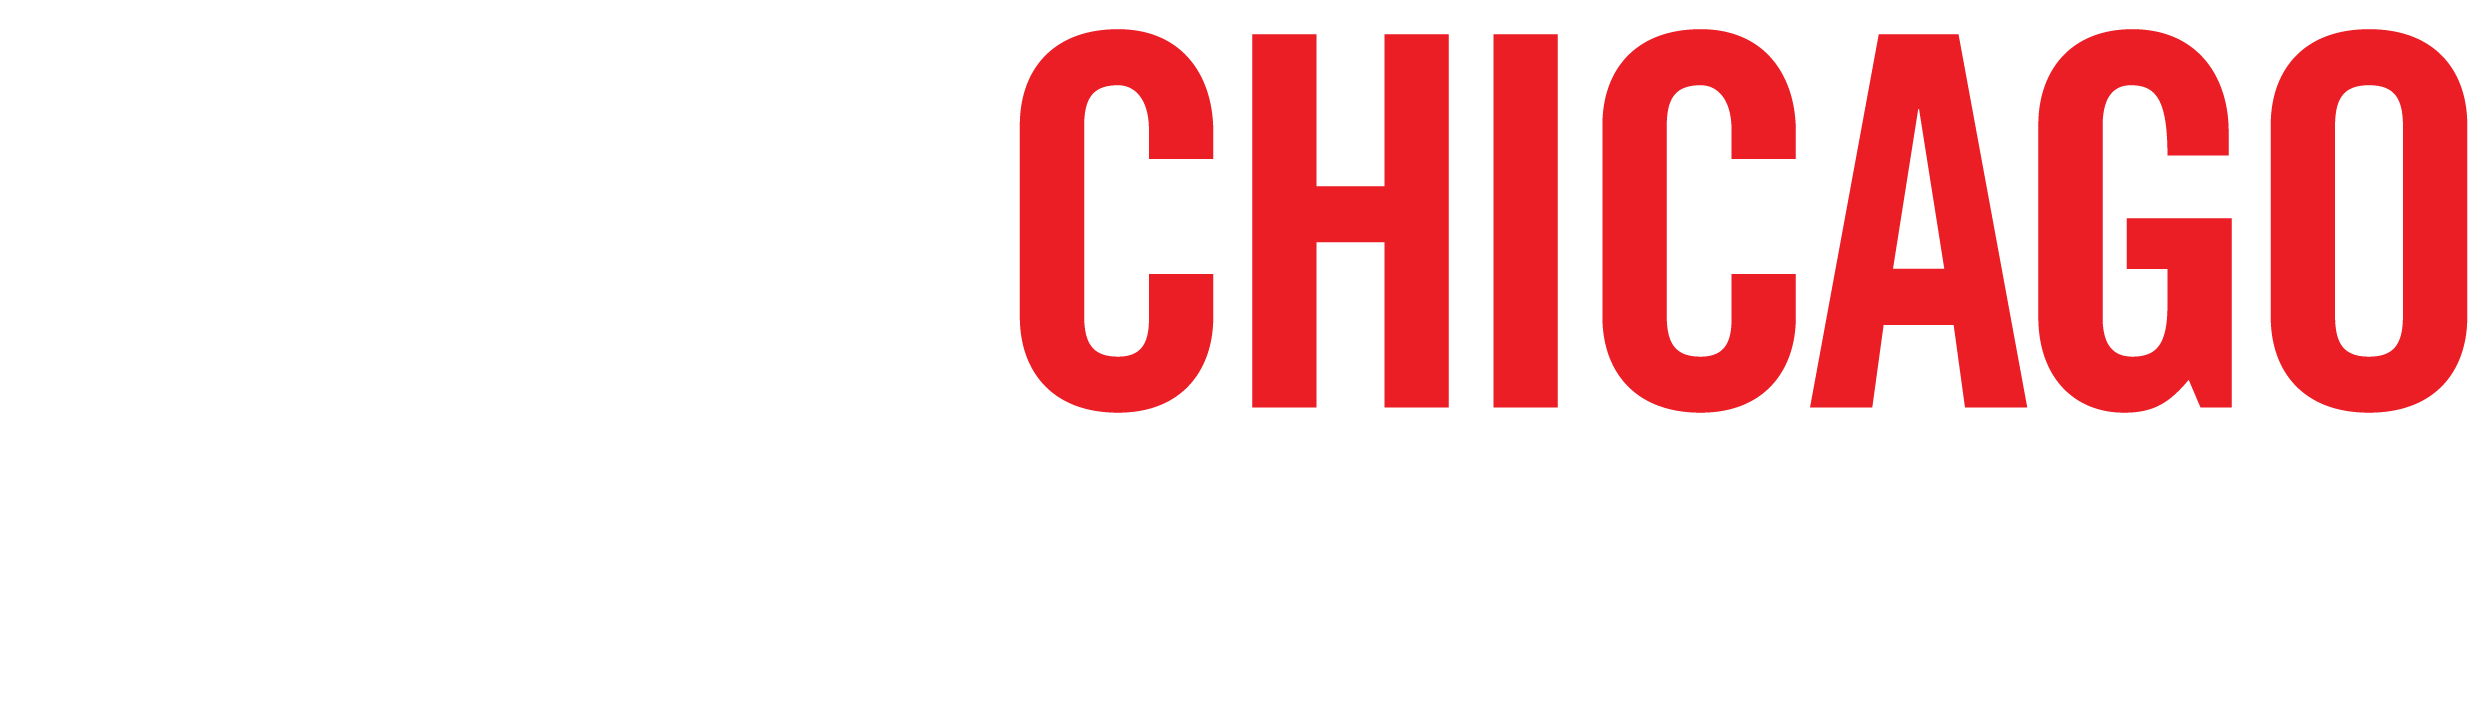 WBEZ Logo - Your NPR News Source